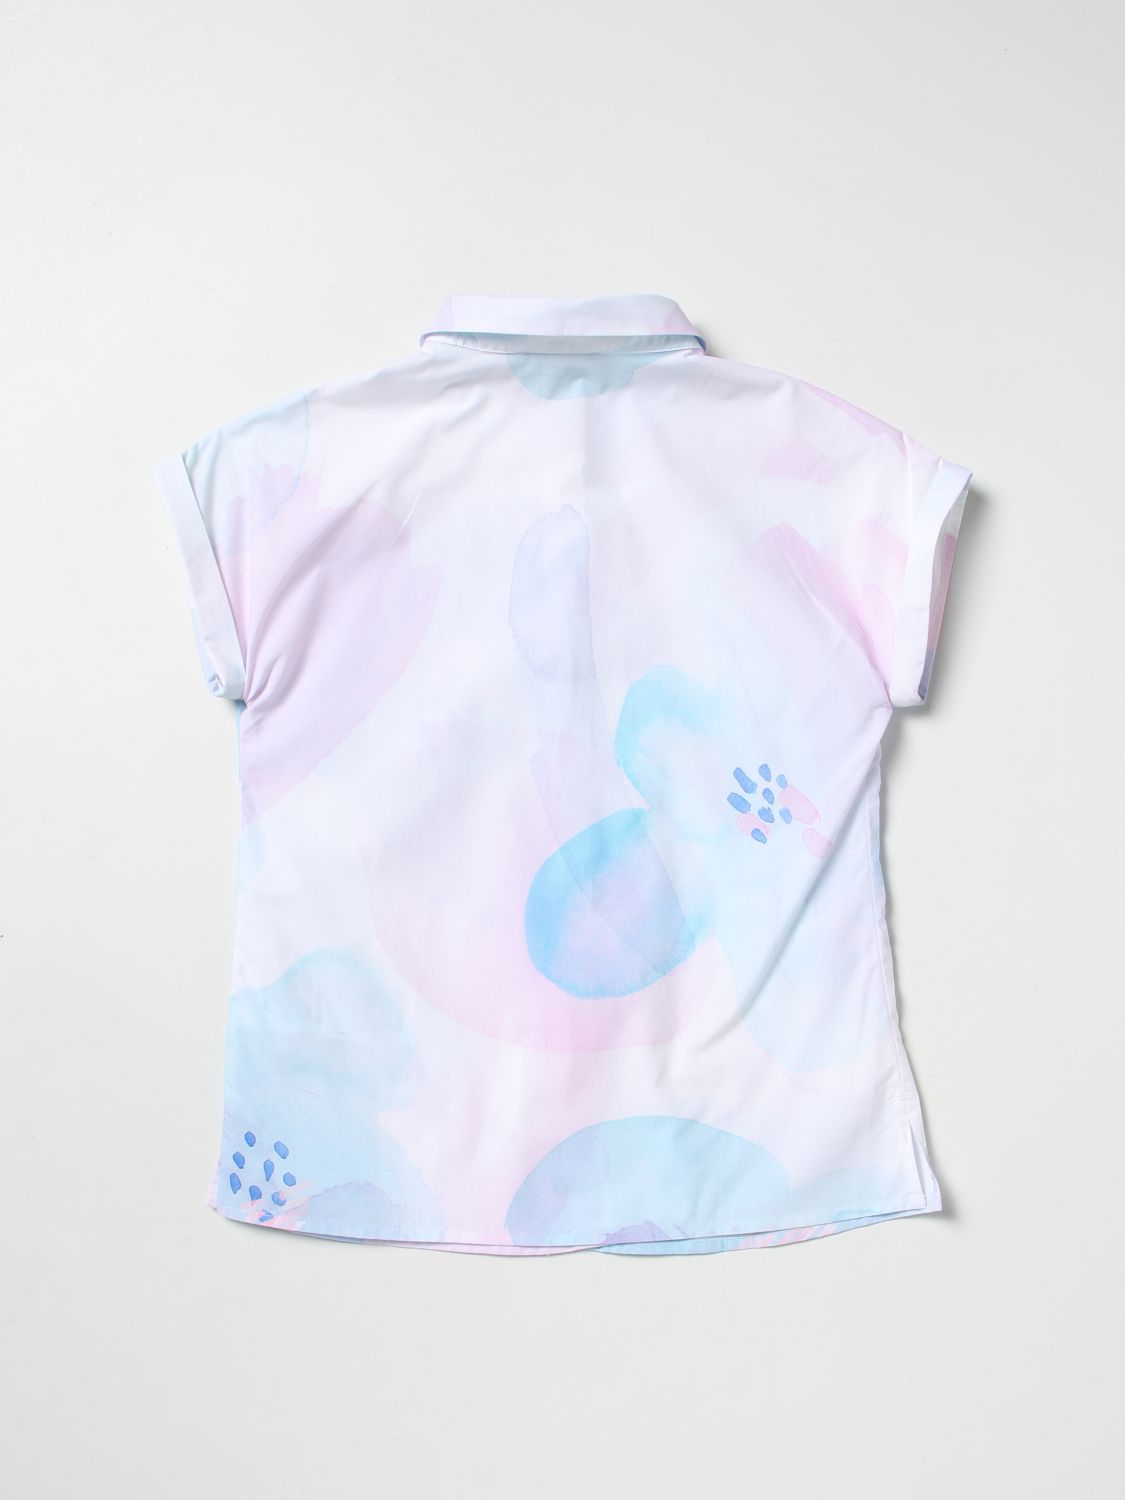 Liever Meetbaar lekkage EMPORIO ARMANI KIDS: shirt for girls - Multicolor | Emporio Armani Kids  shirt 3R3C033N5HZ online on GIGLIO.COM